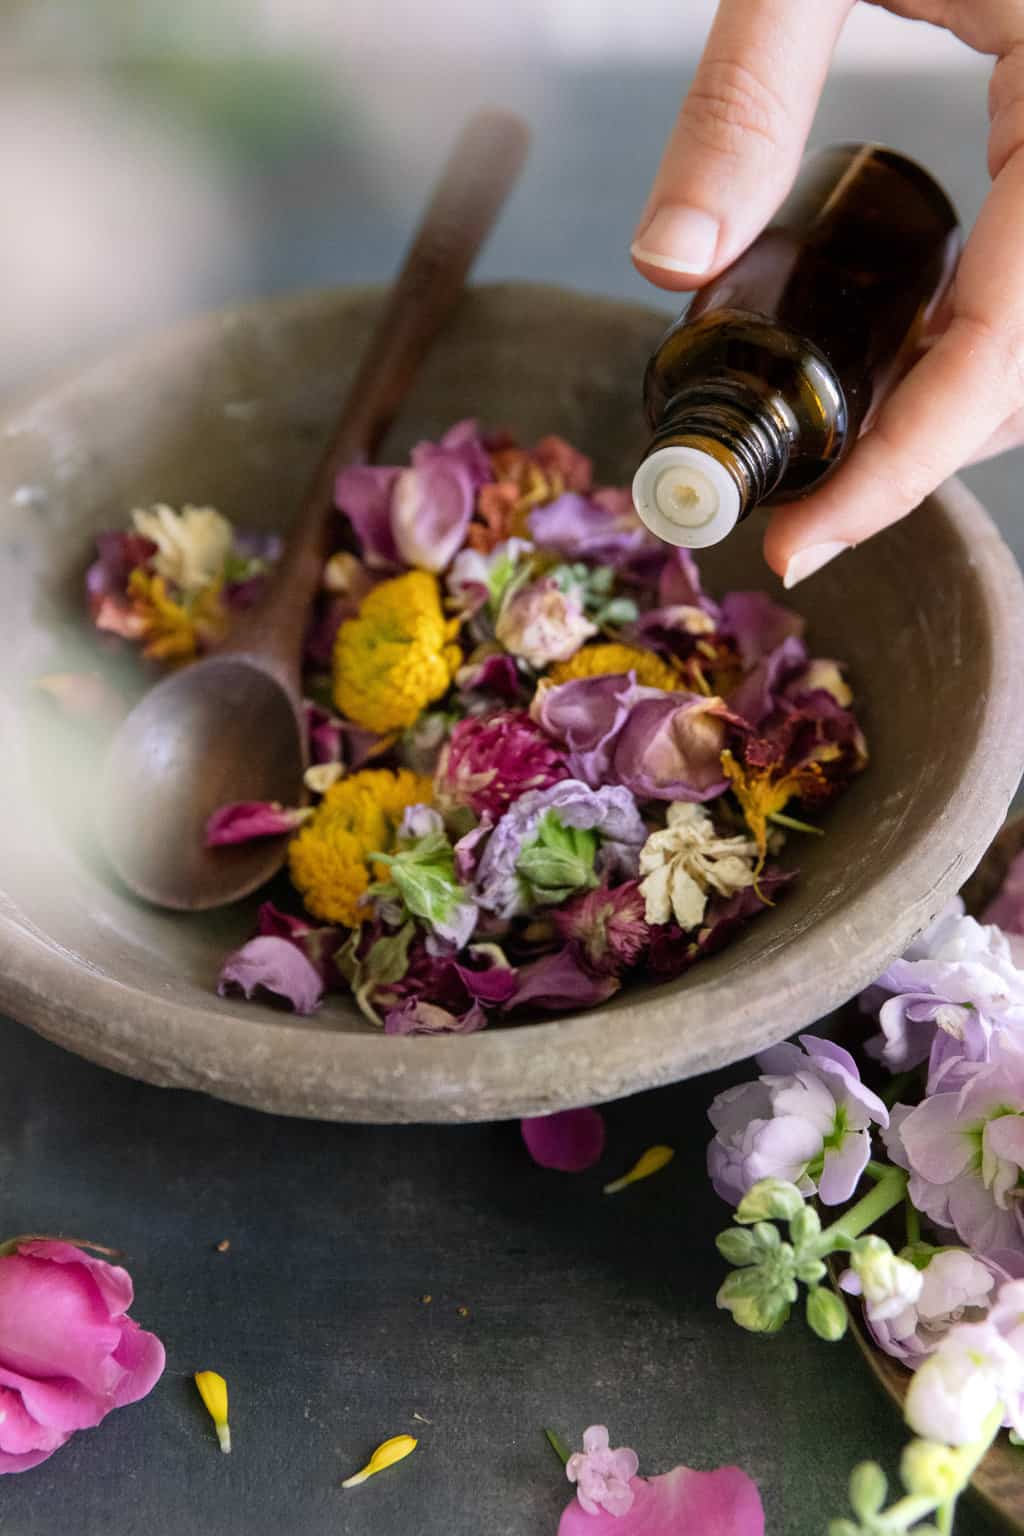 Adding essential oils to homemade potpourri for a natural scent